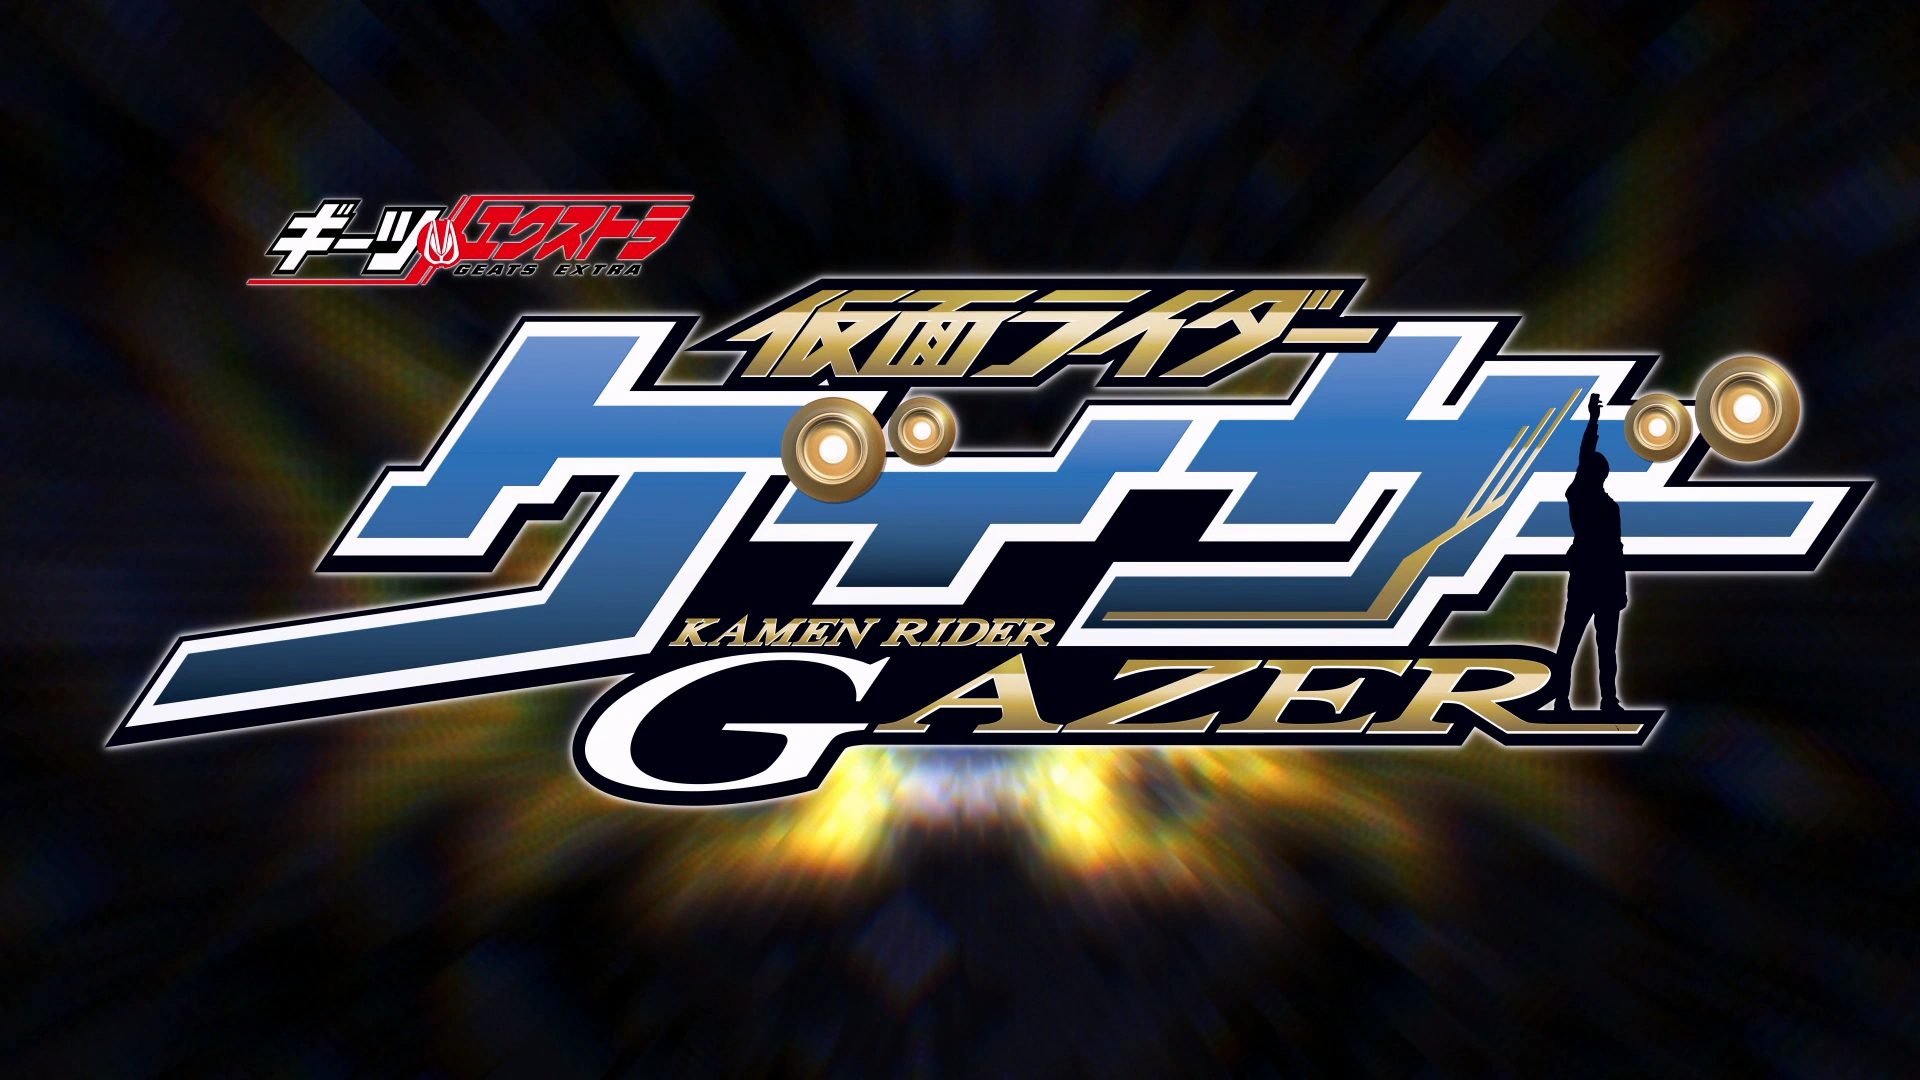 Kamen Rider Geats Extra: Kamen Rider Gazer